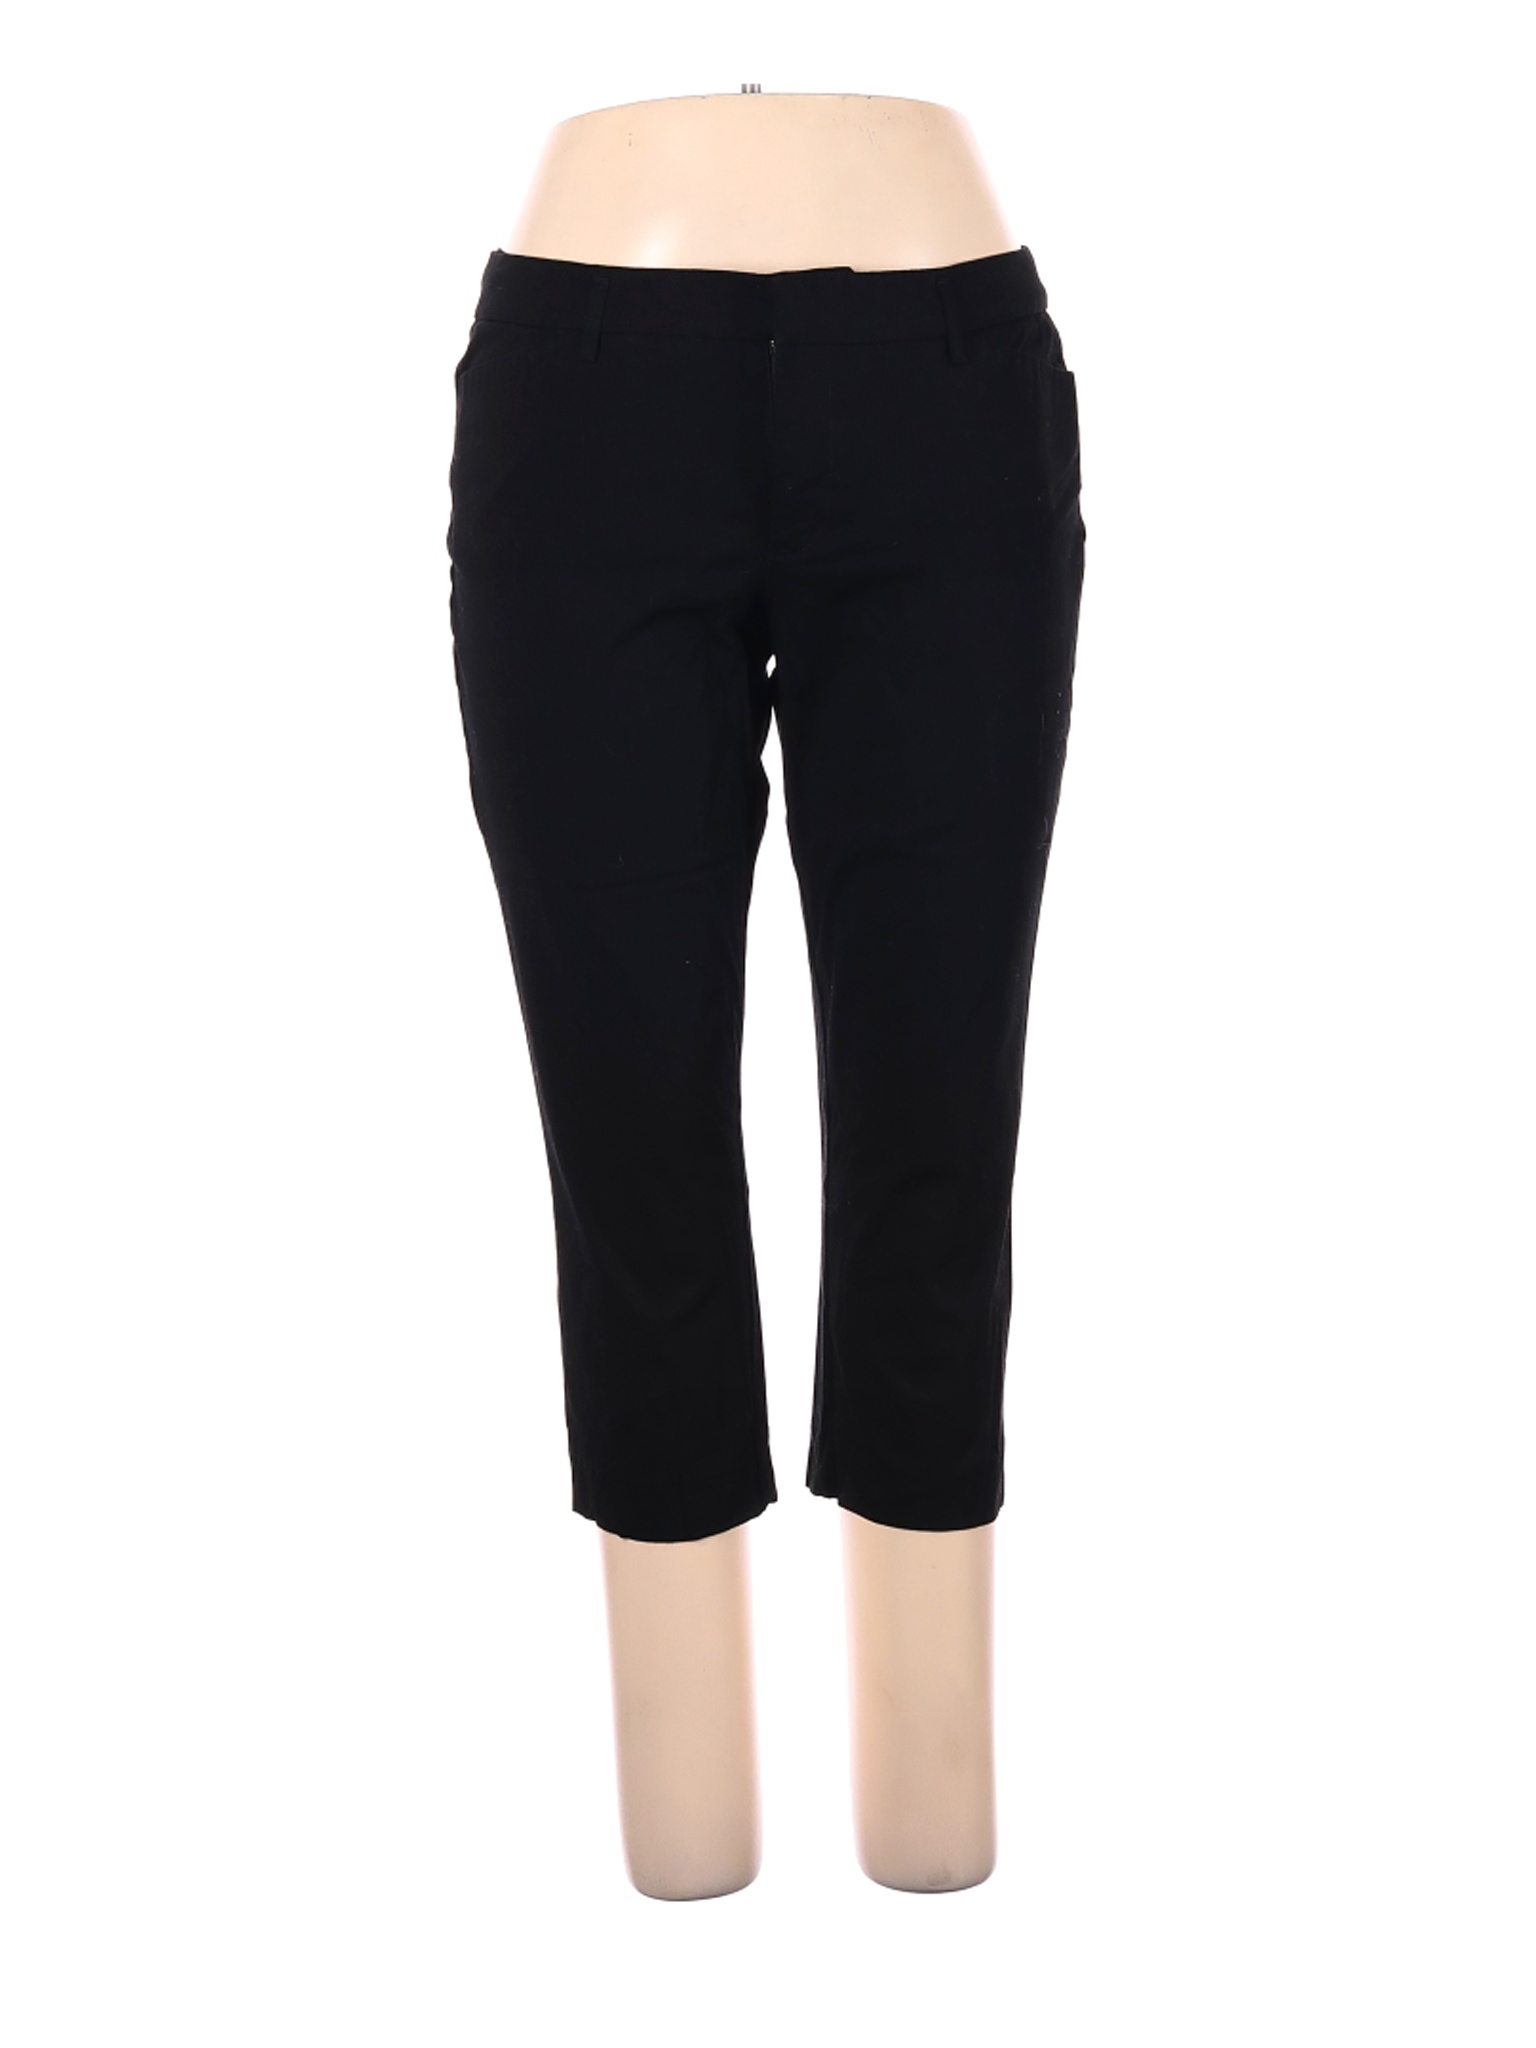 Jcpenney Women Black Dress Pants 16 Petites | eBay